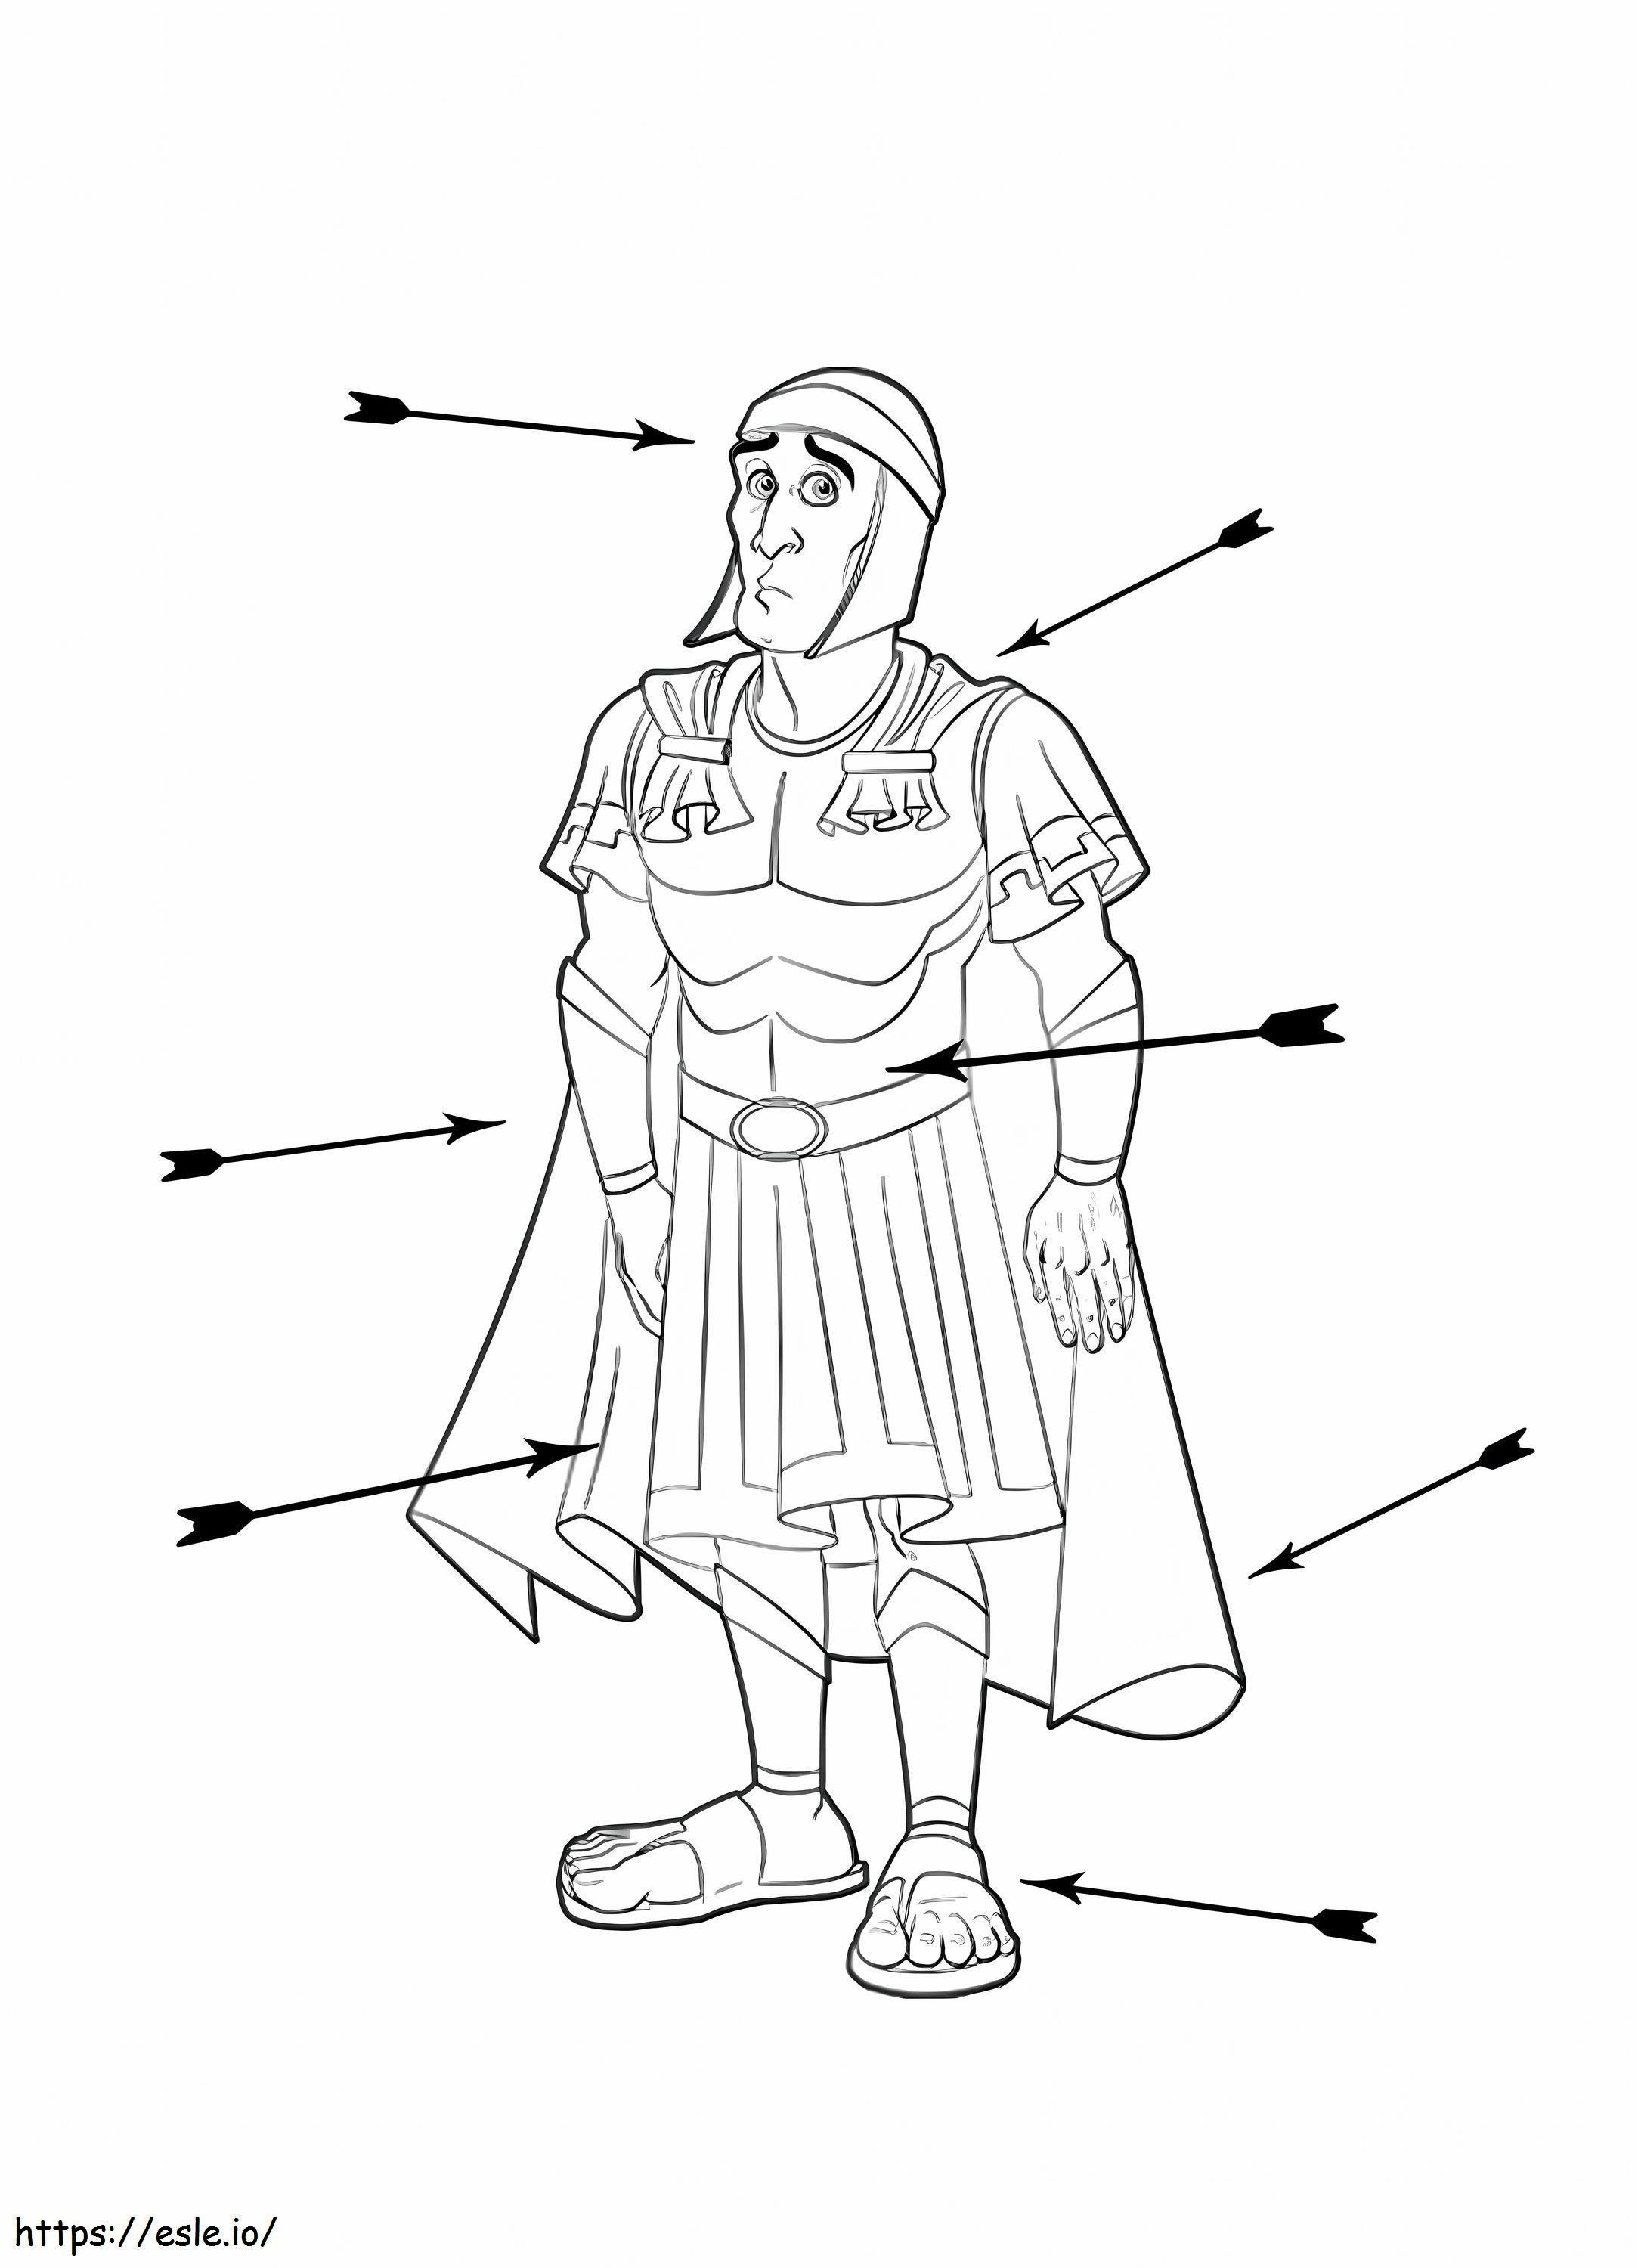 Etiqueta a un soldado romano a escala para colorear